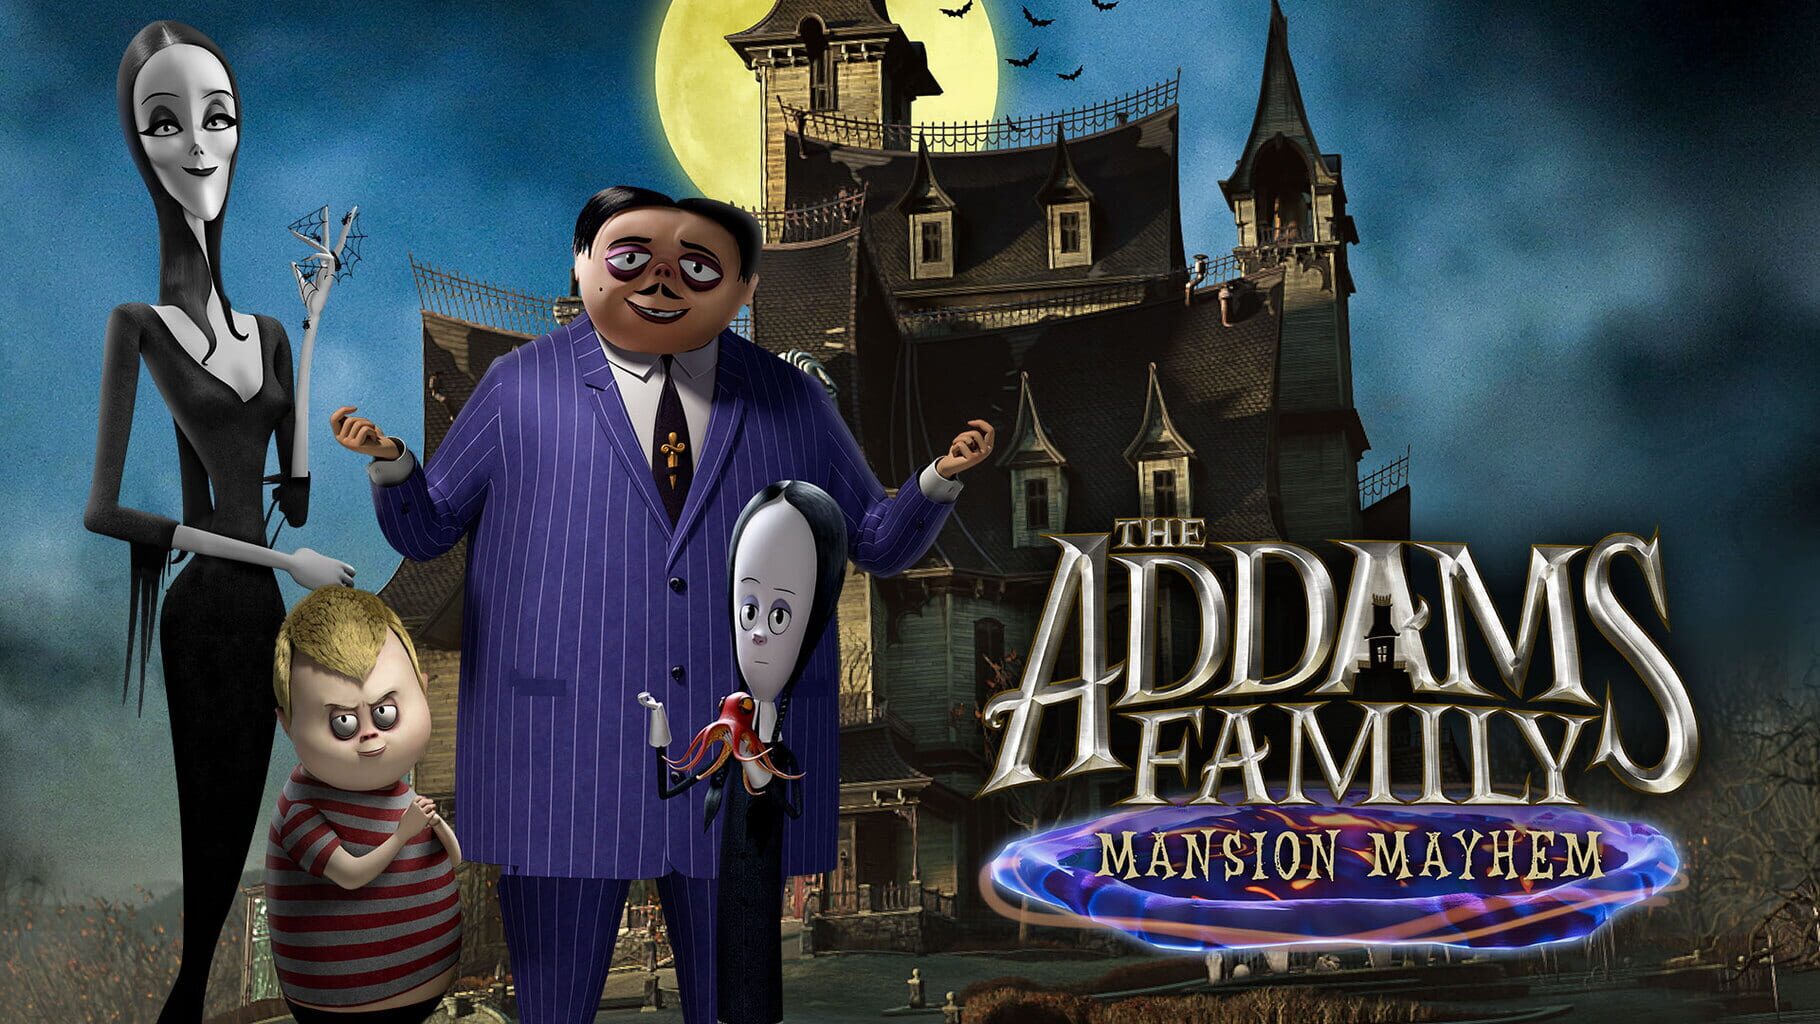 The Addams Family: Mansion Mayhem Image